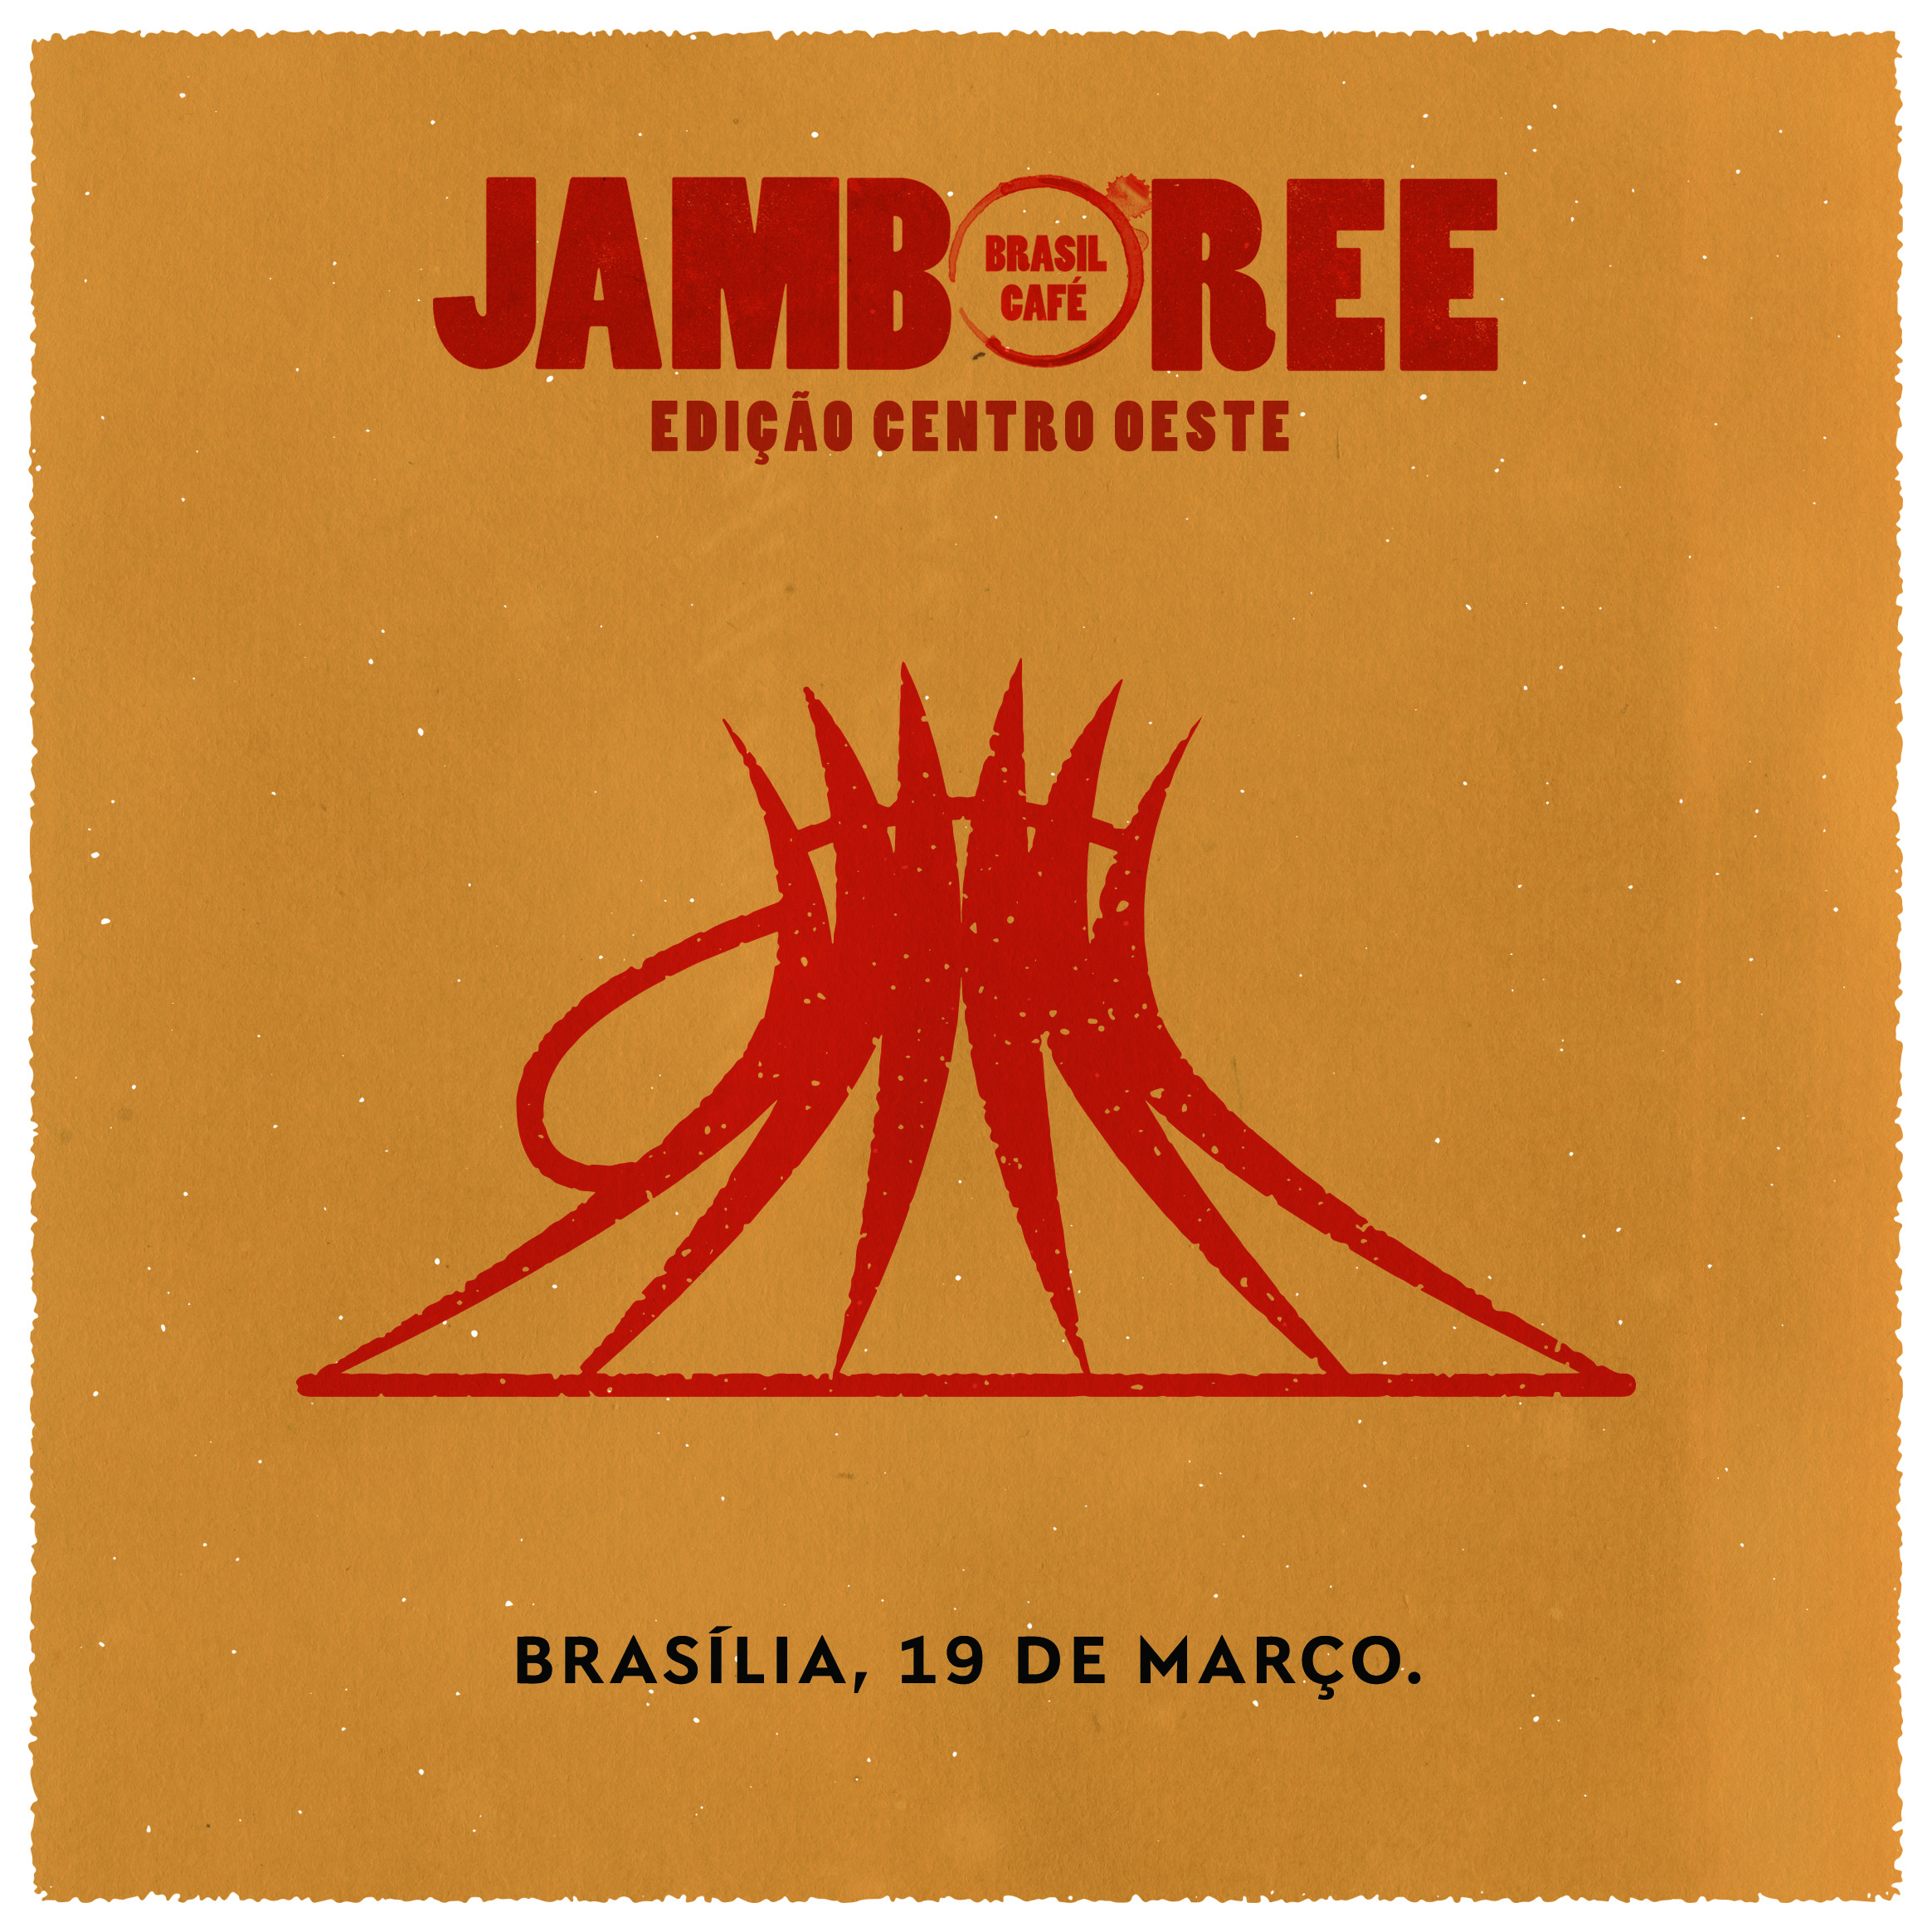 JAMBOREE BRASILIA formulario.jpg